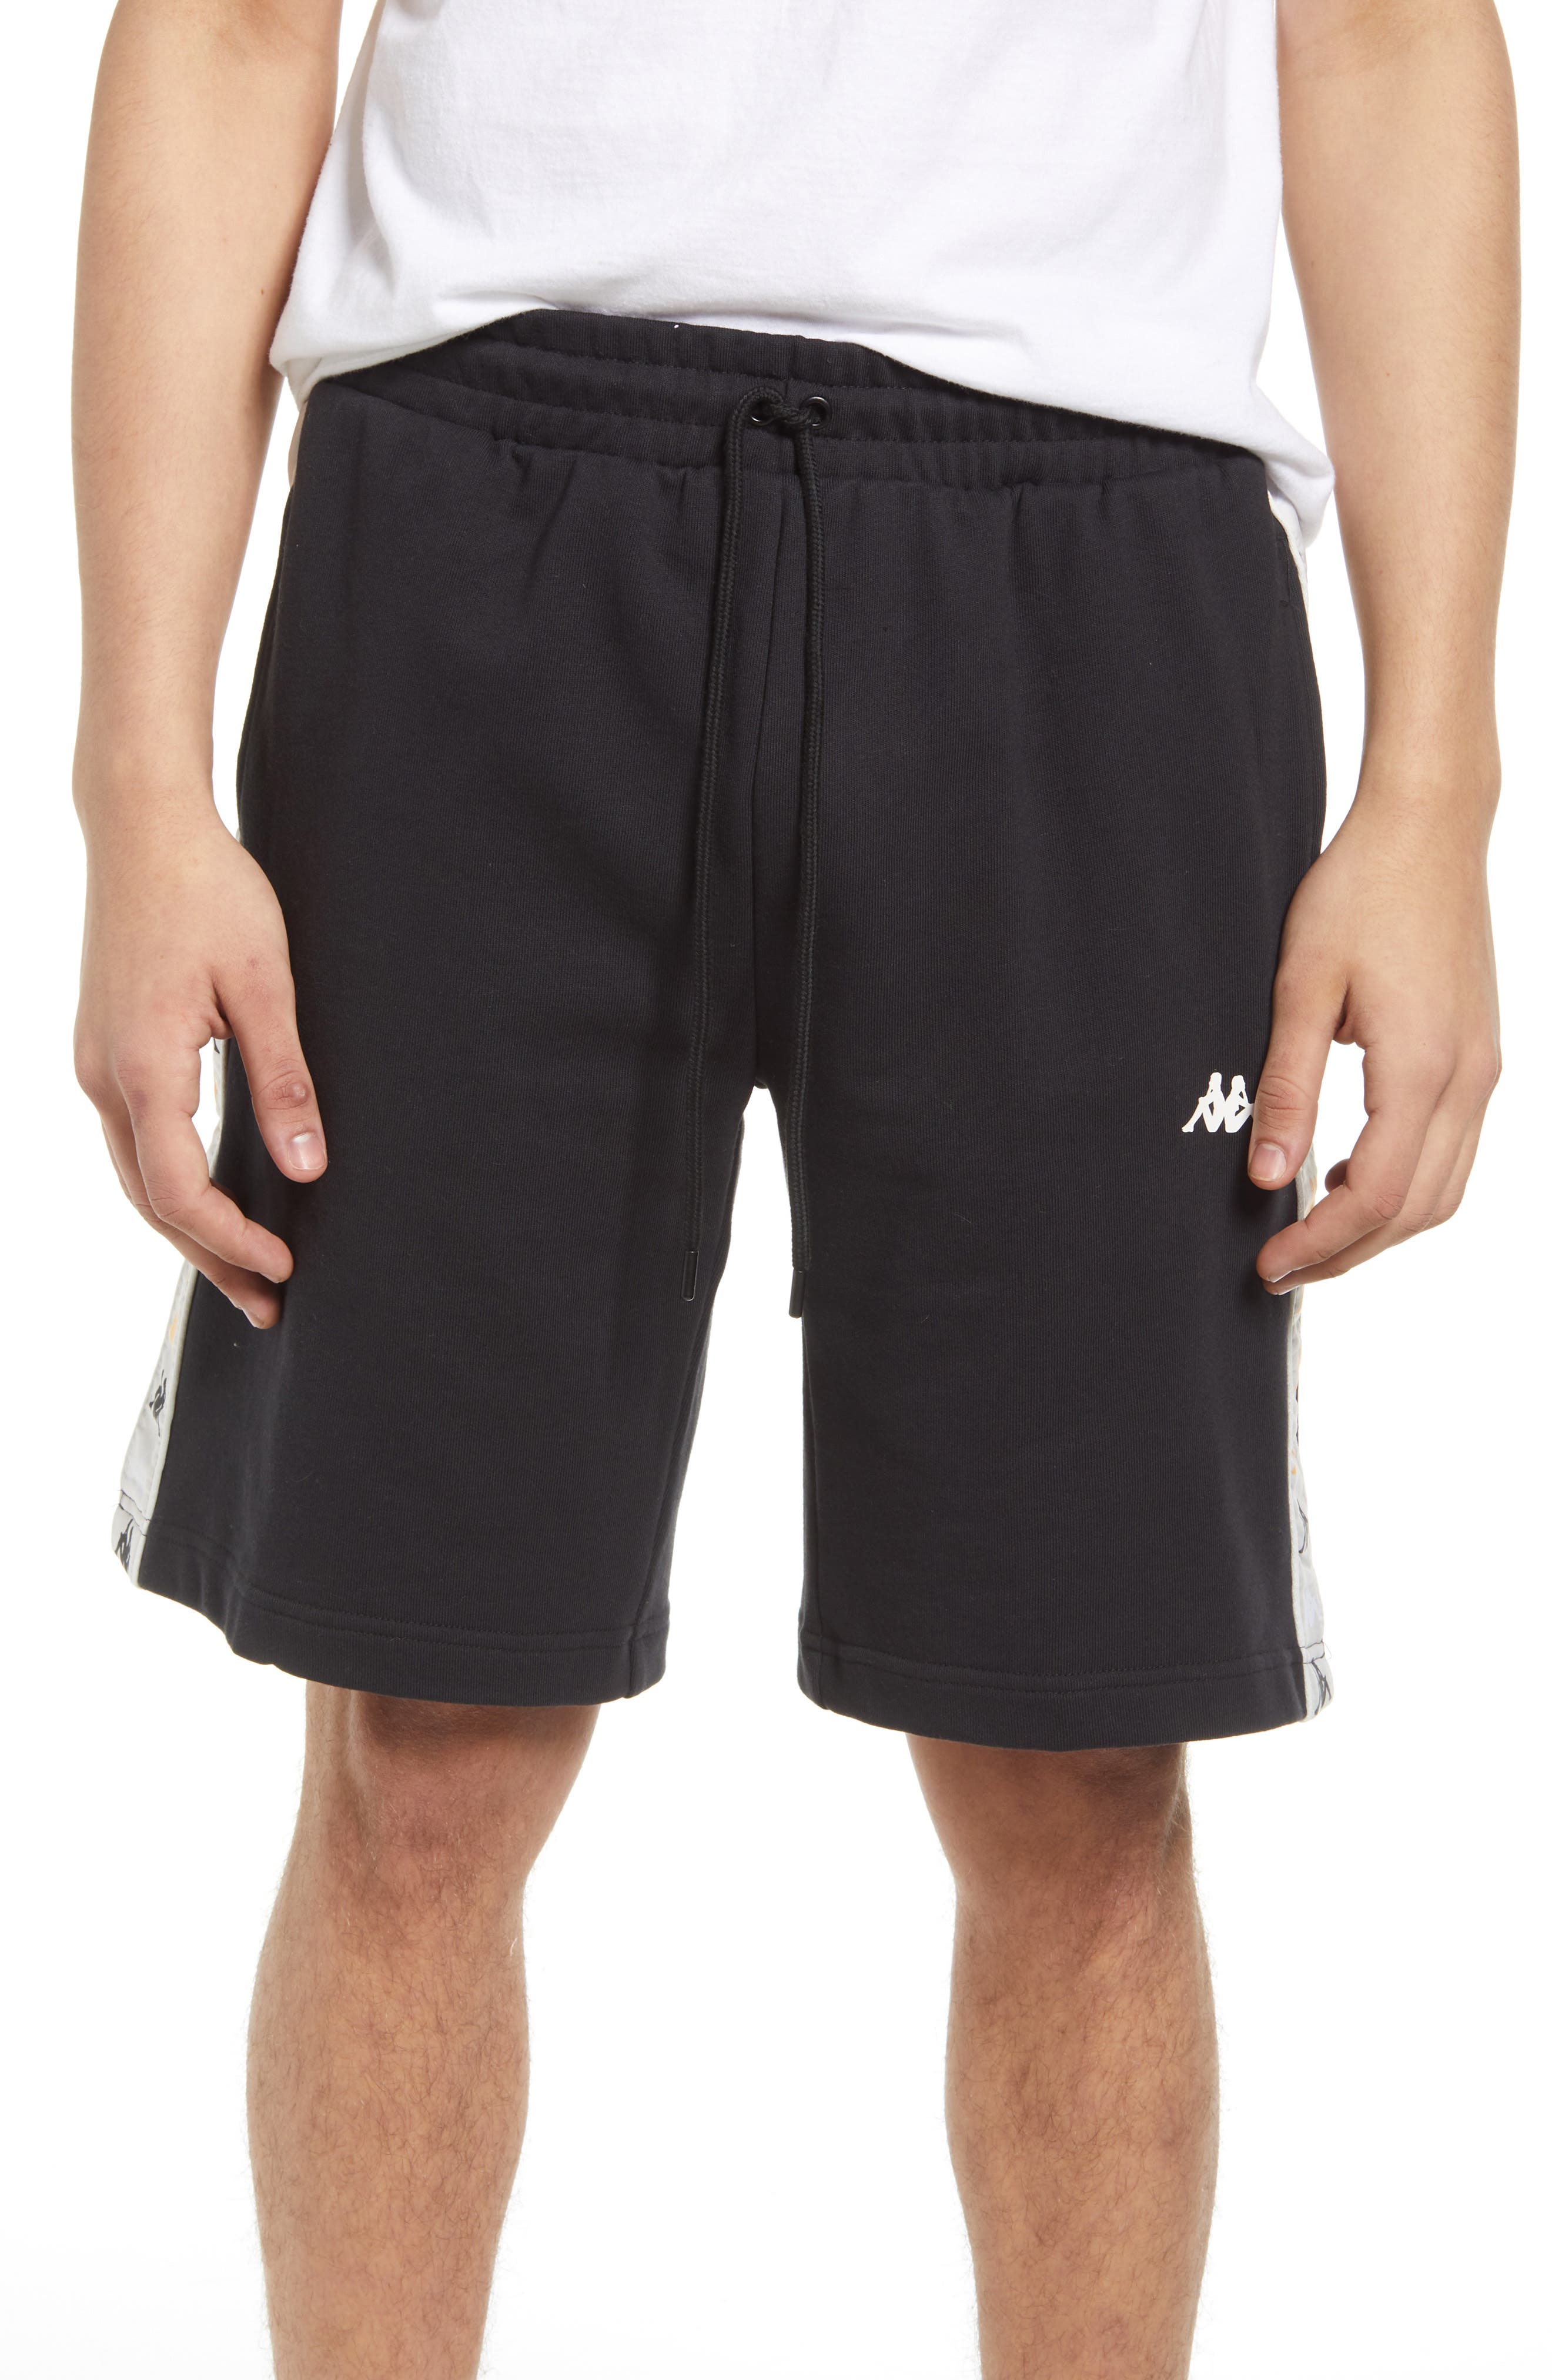 Kappa 222 Banda Marvzin Shorts in Black Smoke-Grey-Orange-White at Nordstrom, Size Large